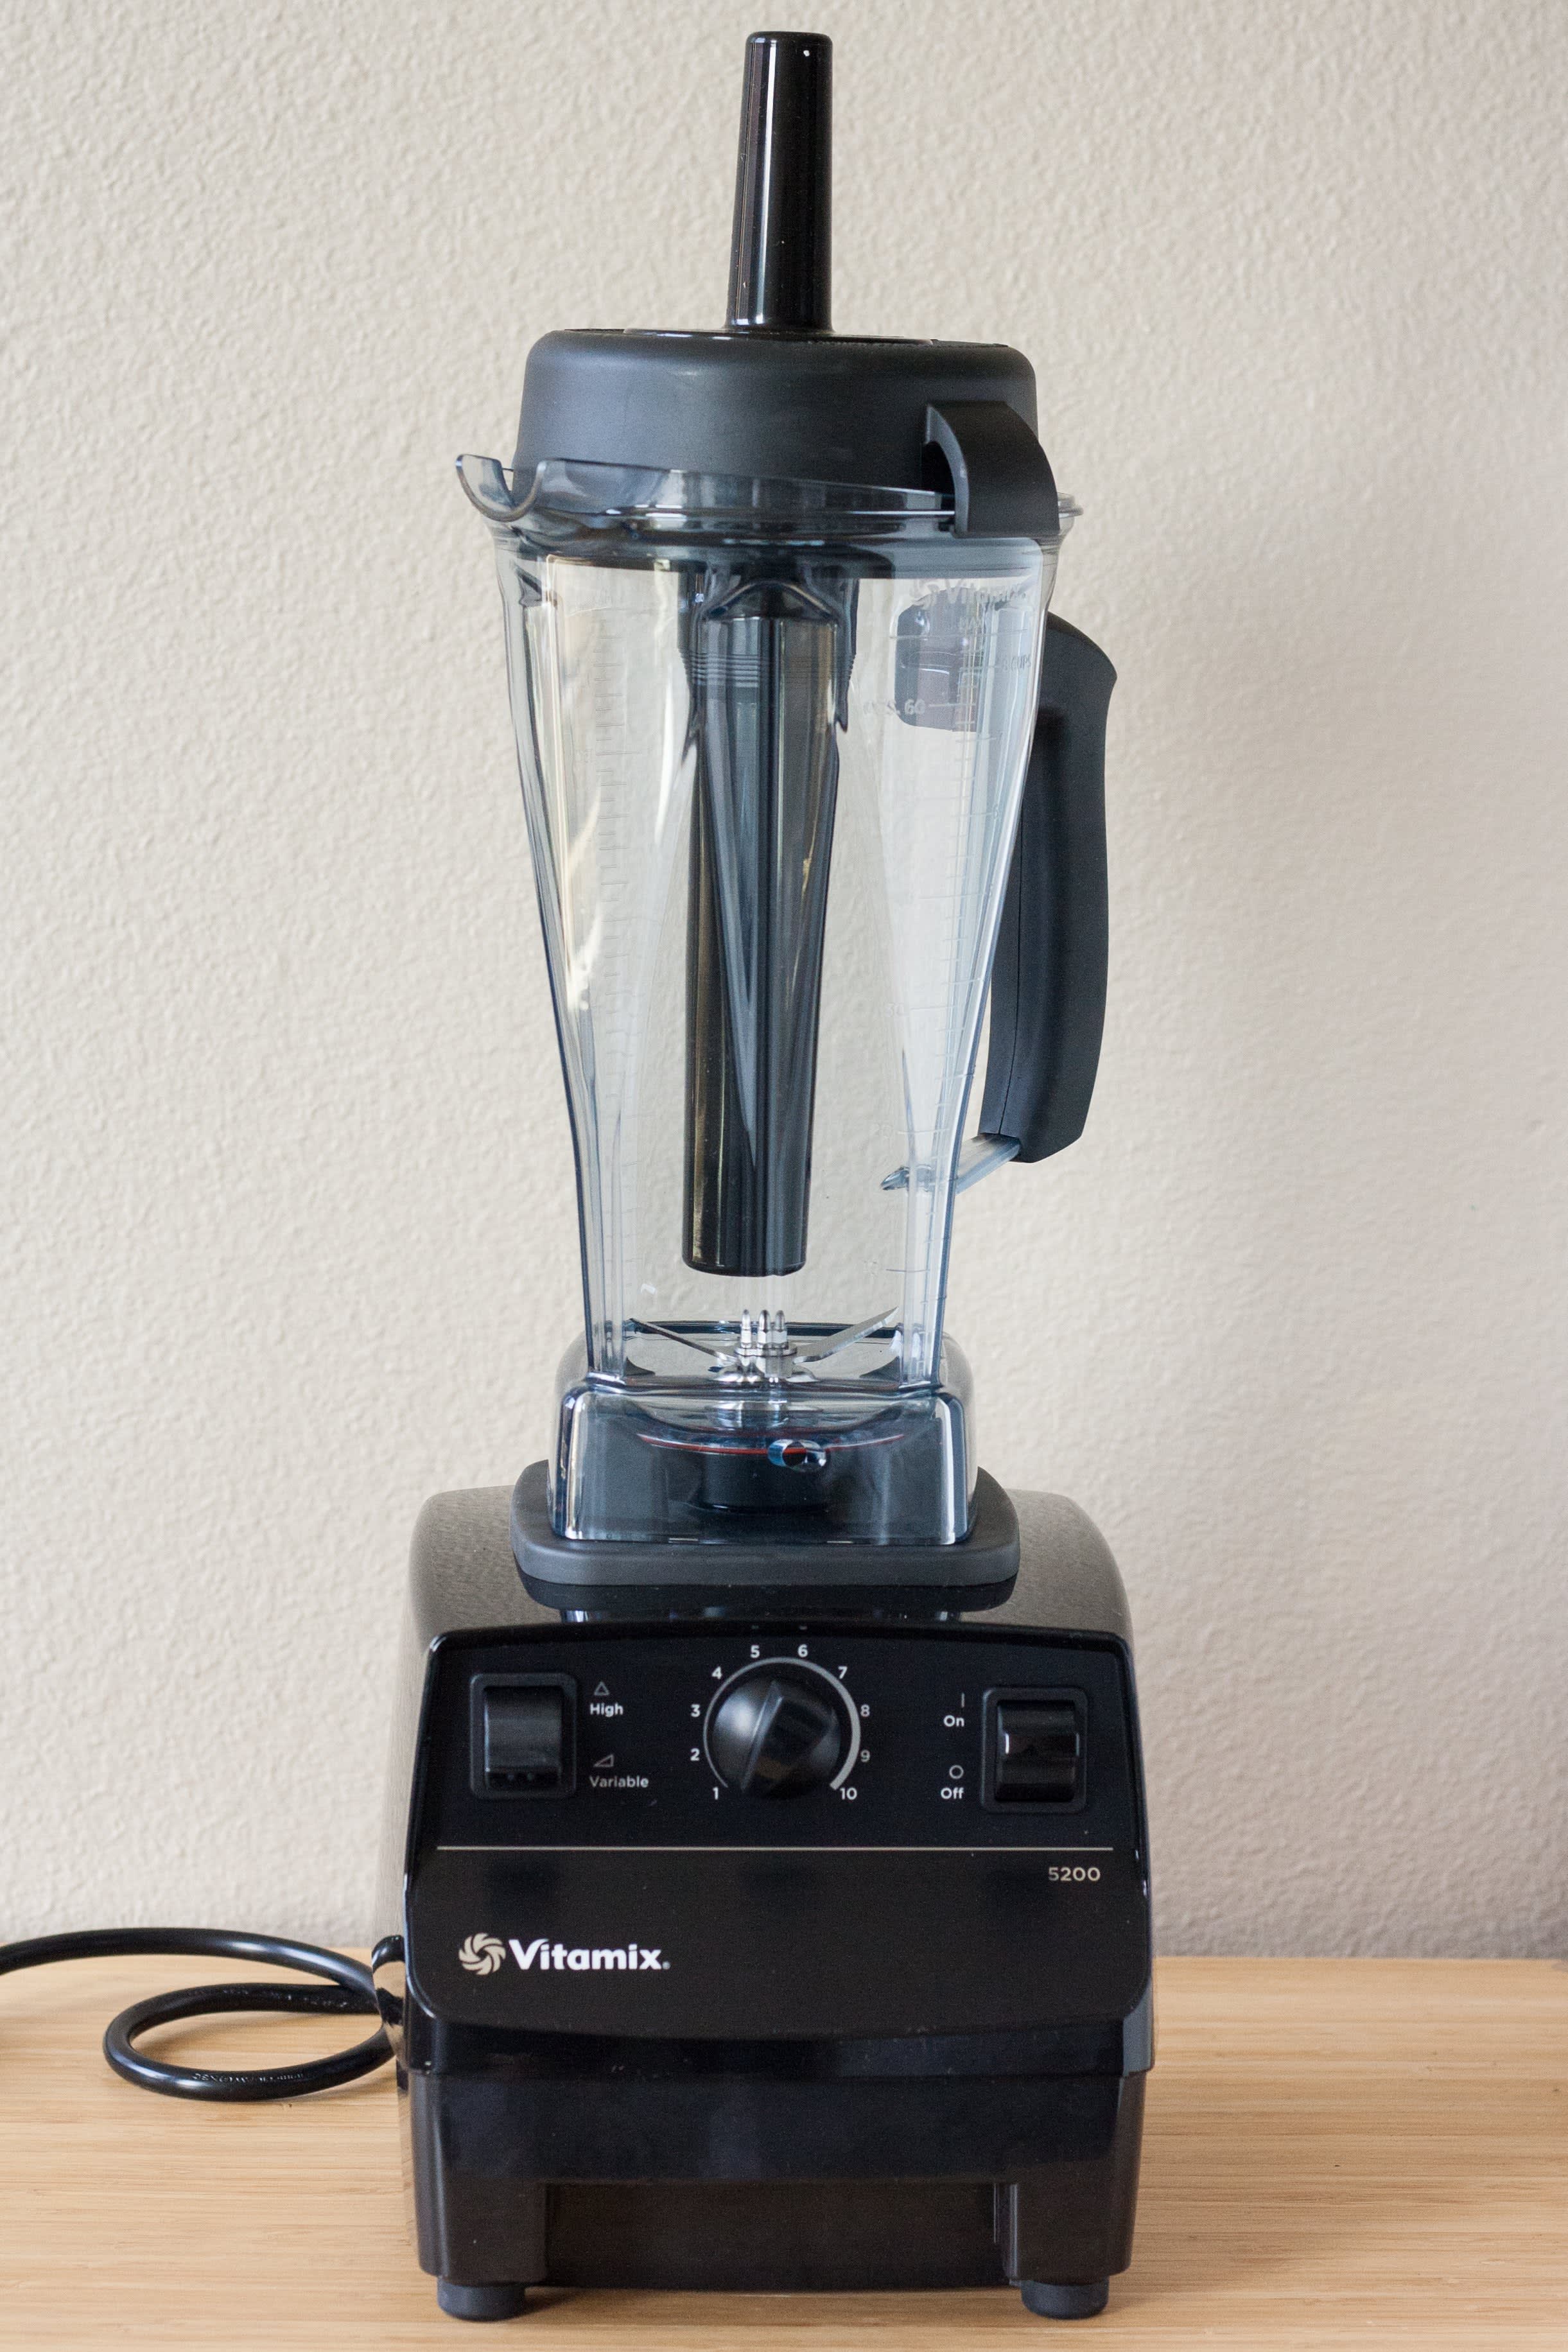 Vitamix 5200 Blender review: An appliance worth the money